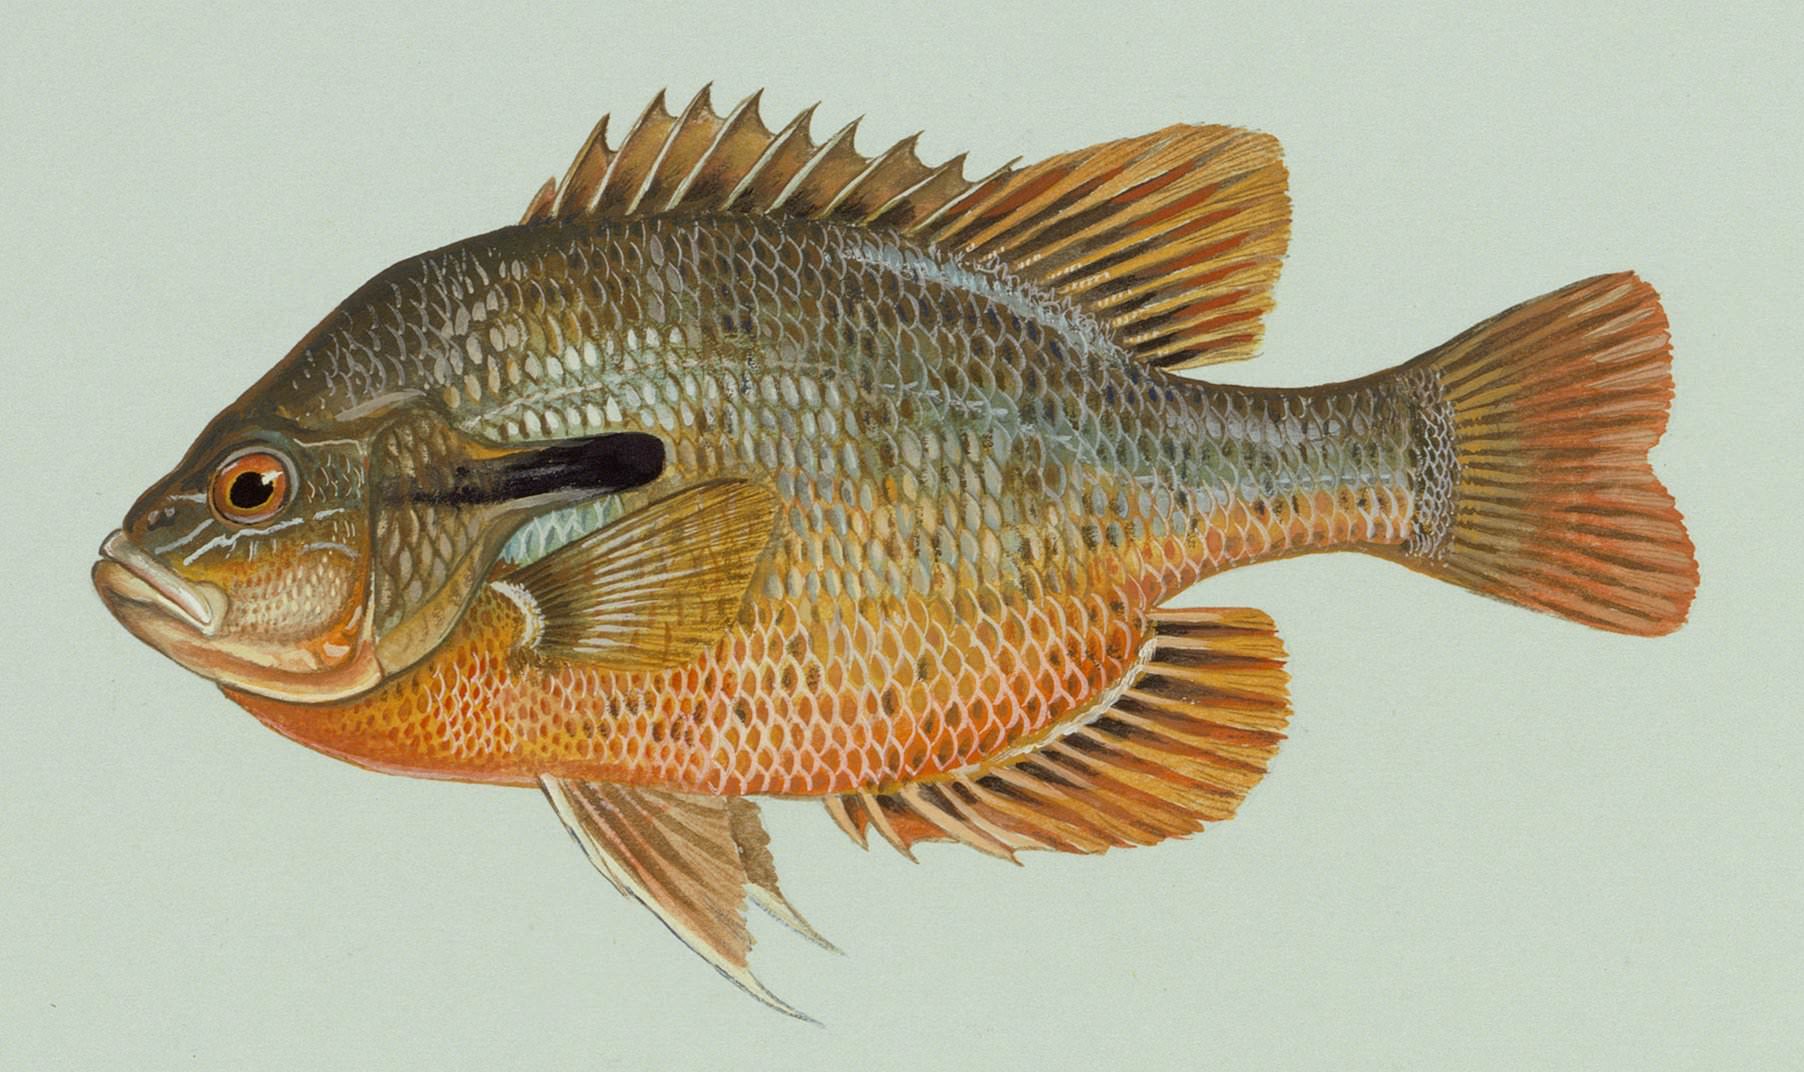 Redbreast sunfish